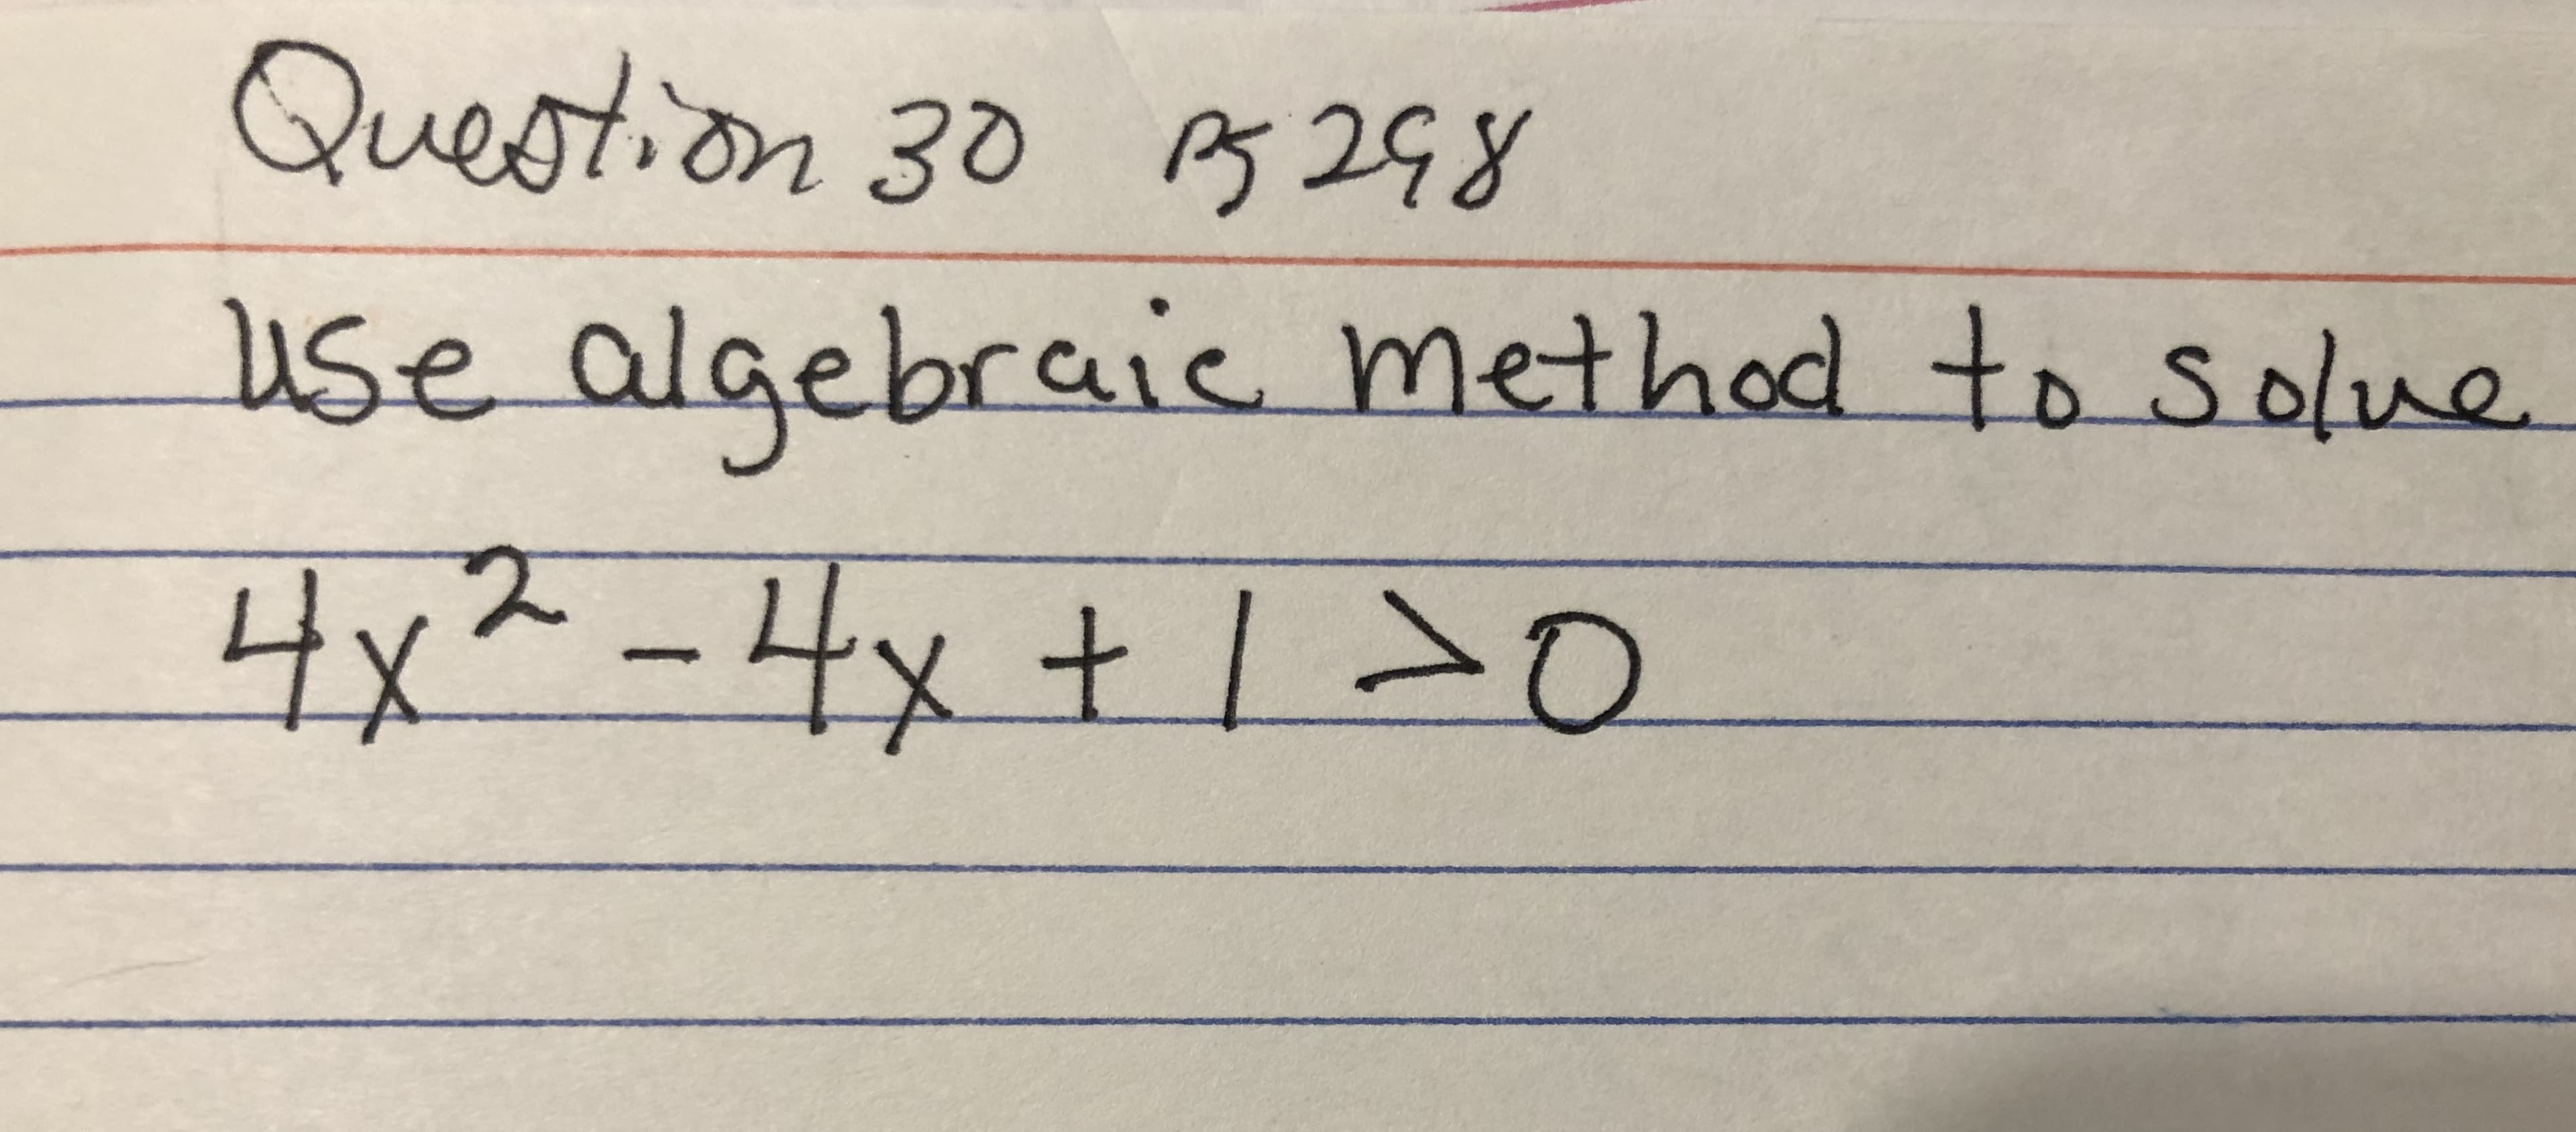 Use algebraie method to solue
4x²-4x+1do
